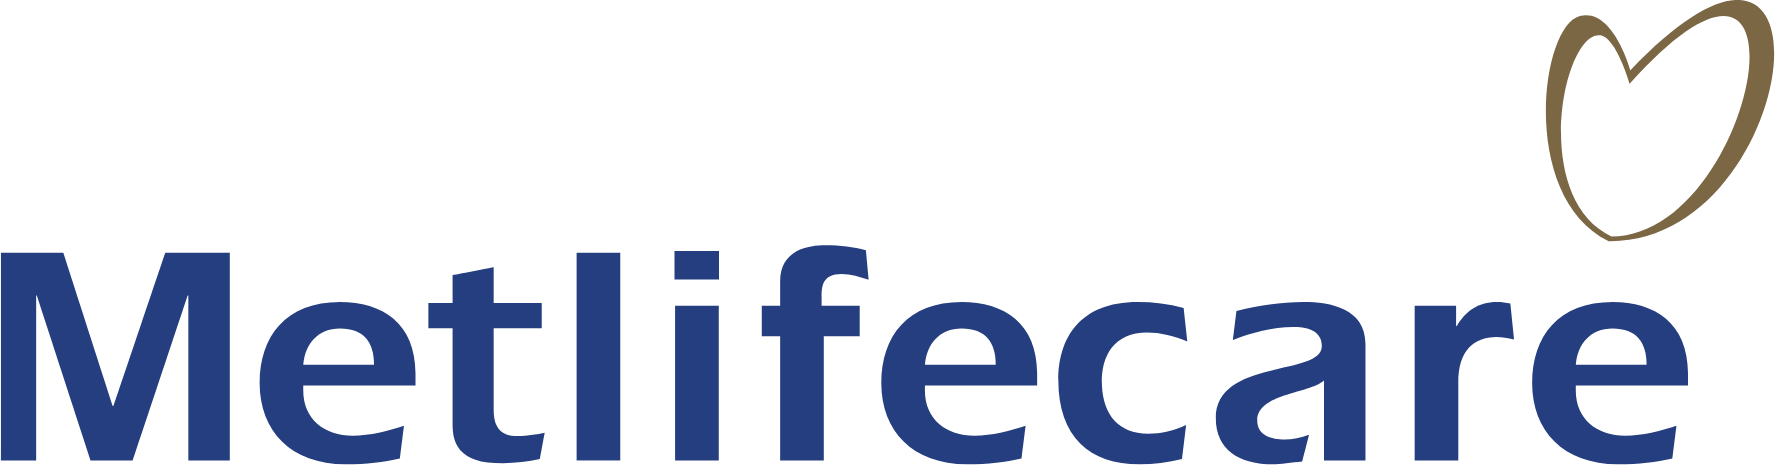 Metlifecare logo large (transparent PNG)